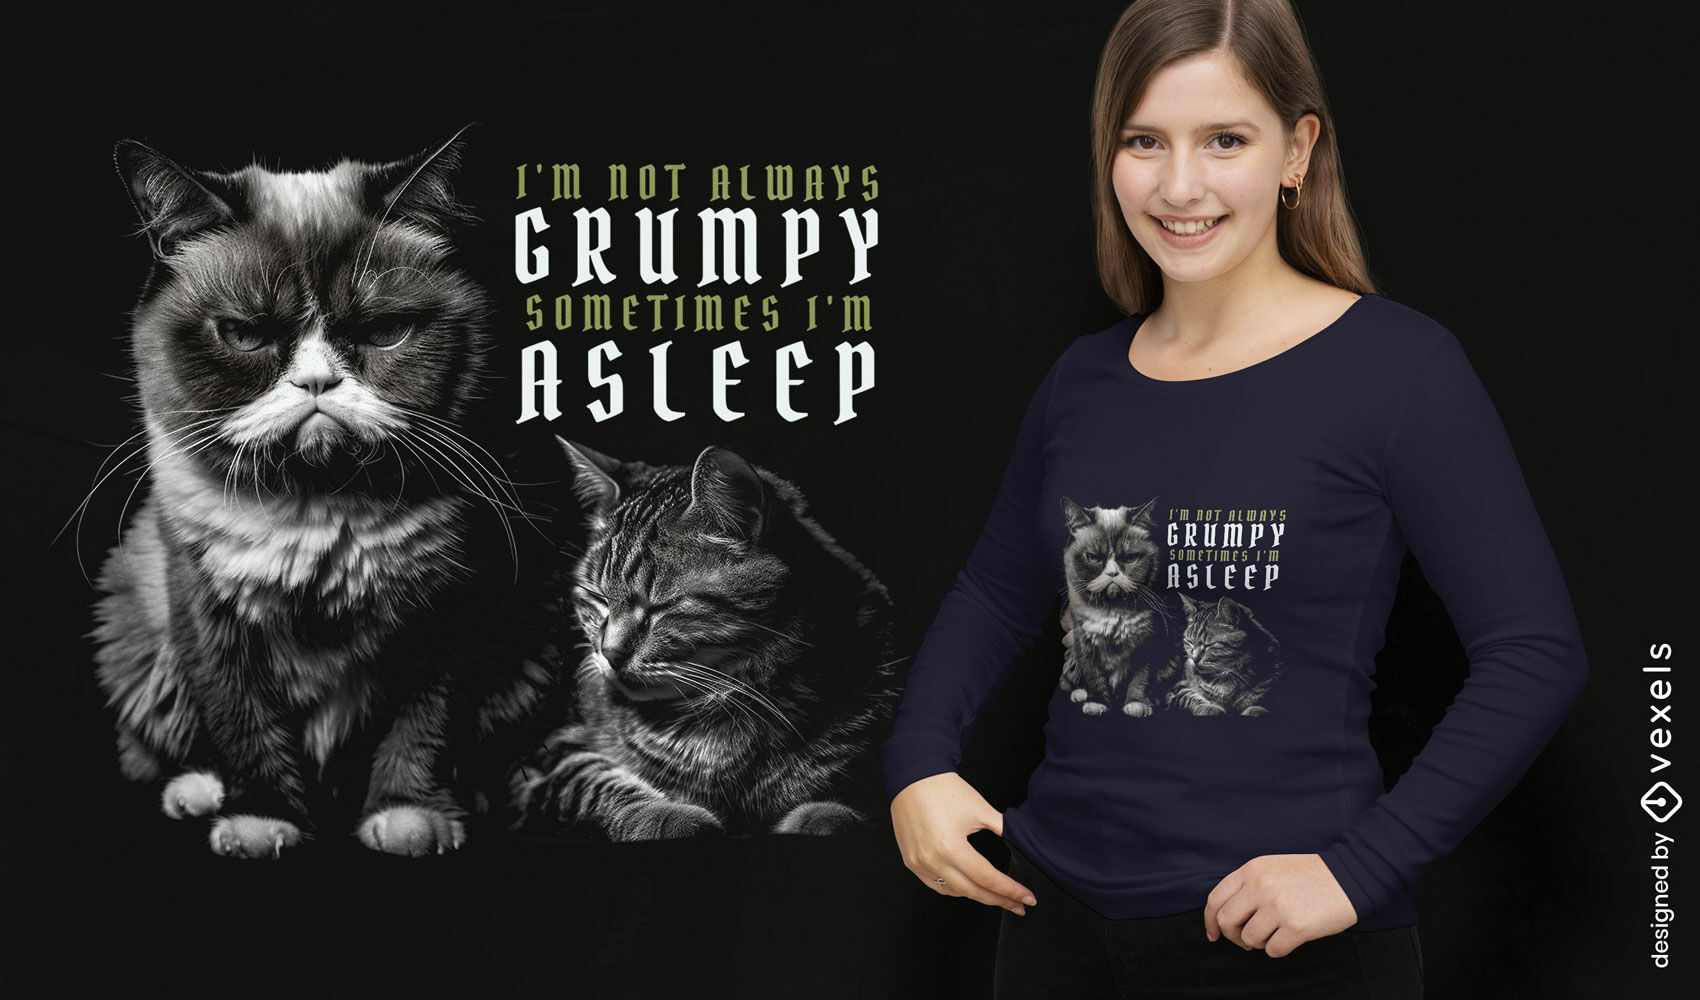 Grumpy and asleep cat quote t-shirt design